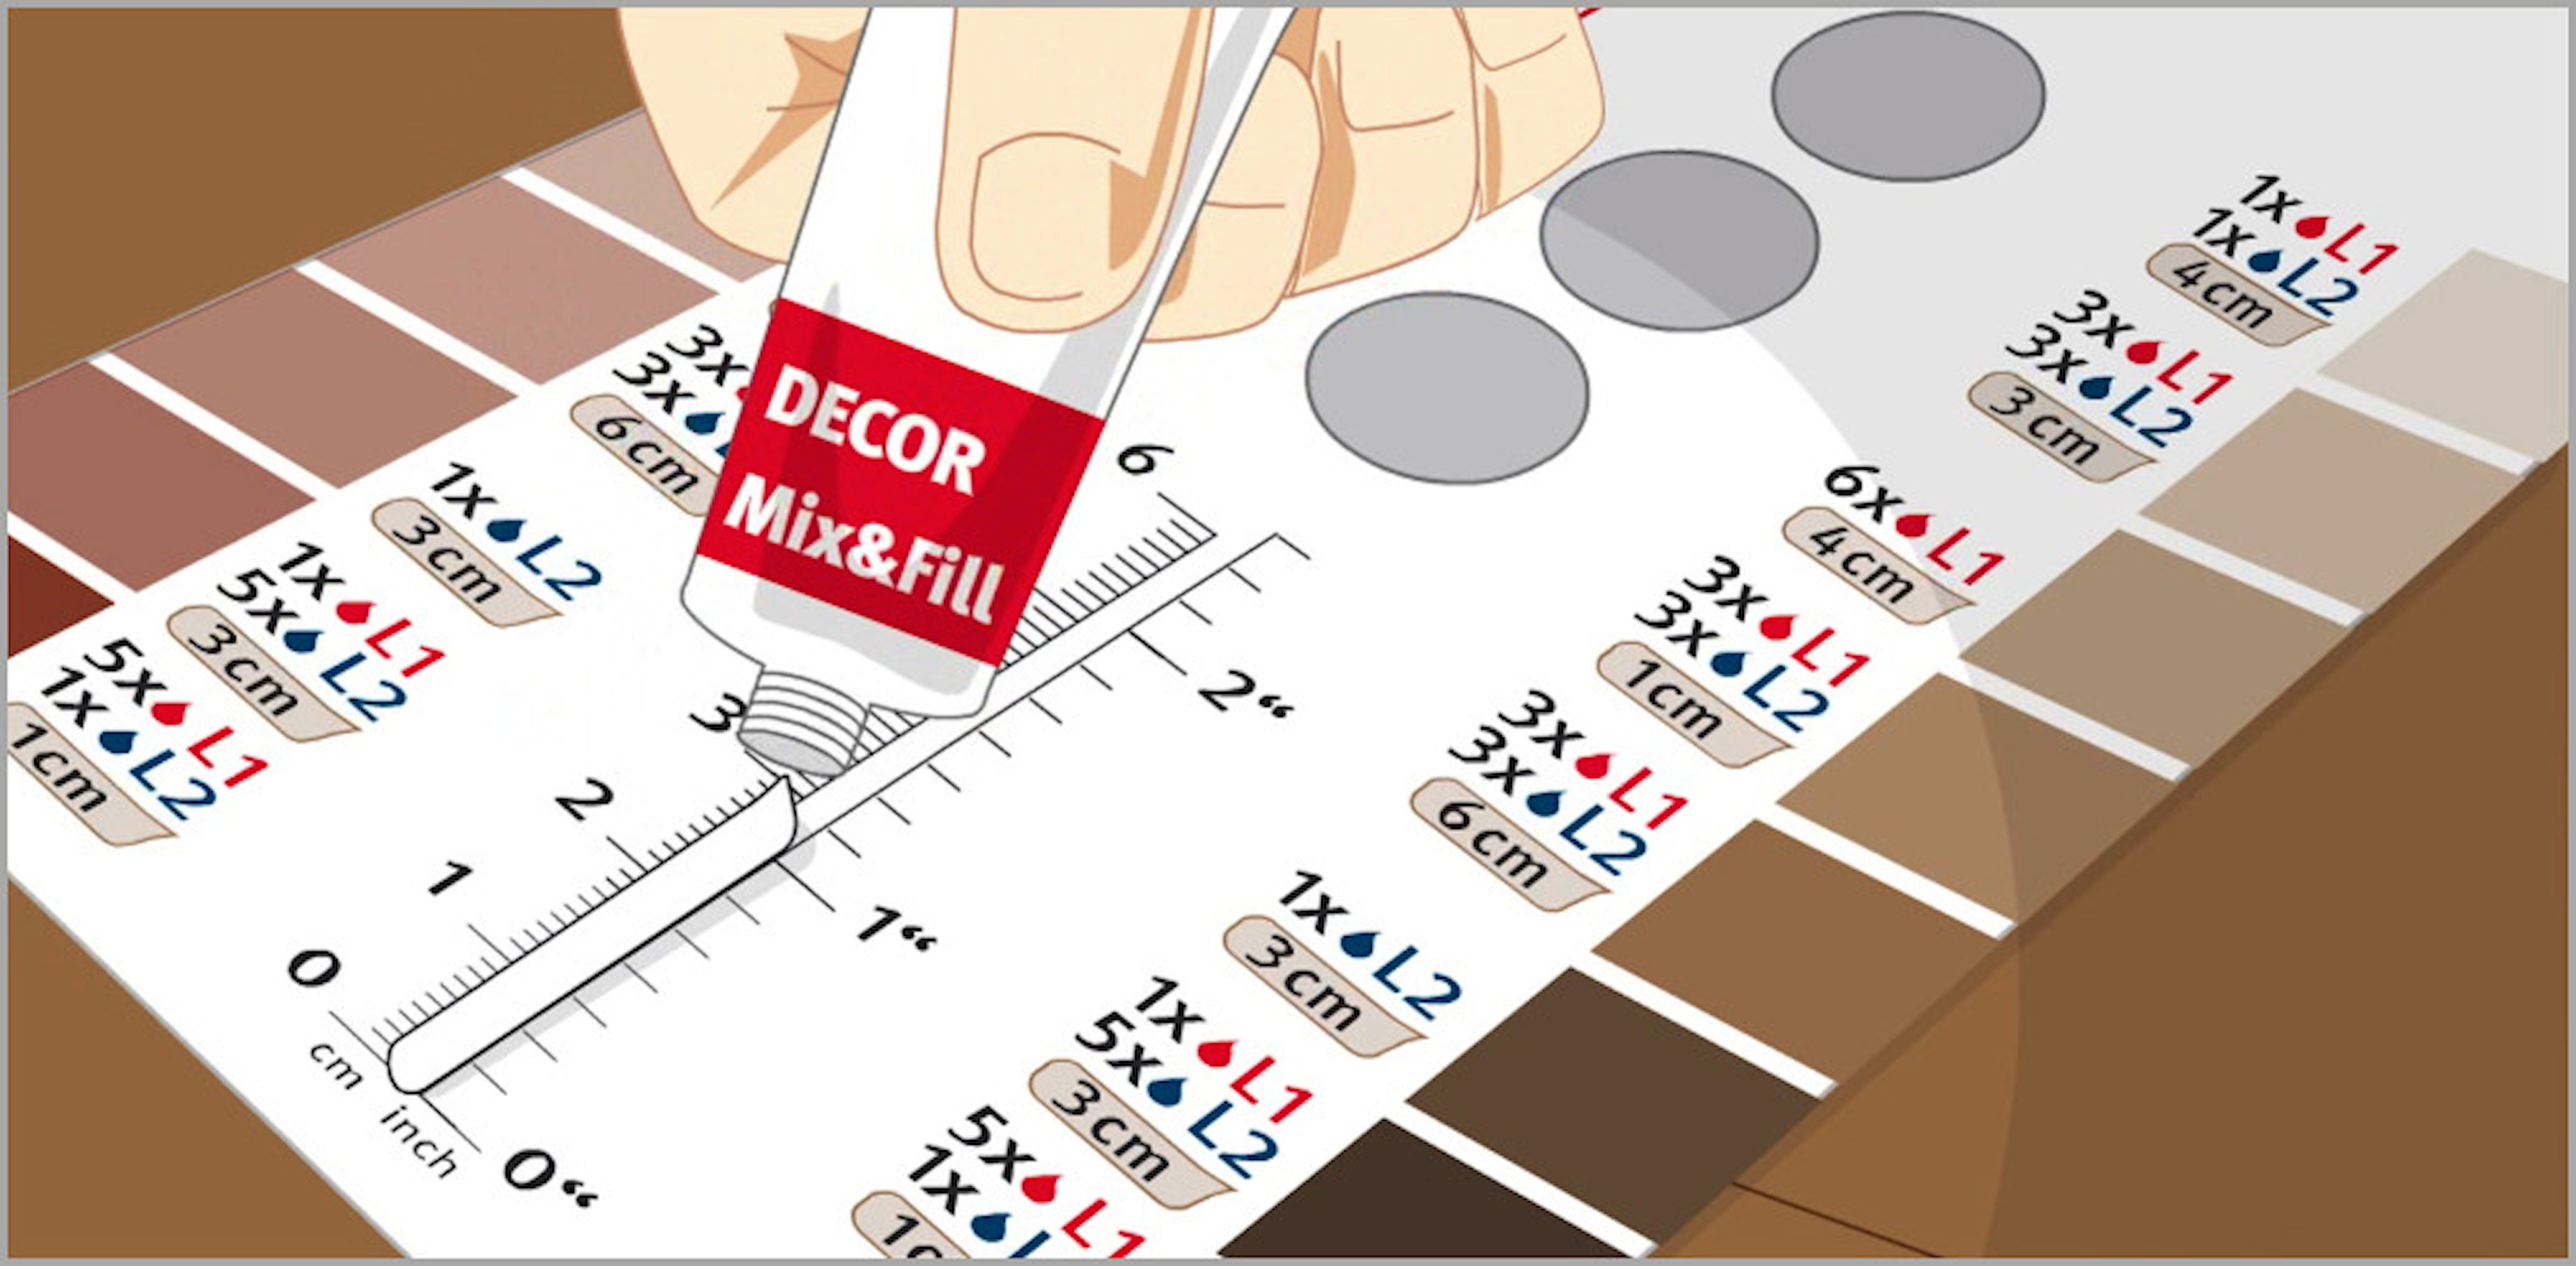 Repairing flooring with Decor Mix & Fill